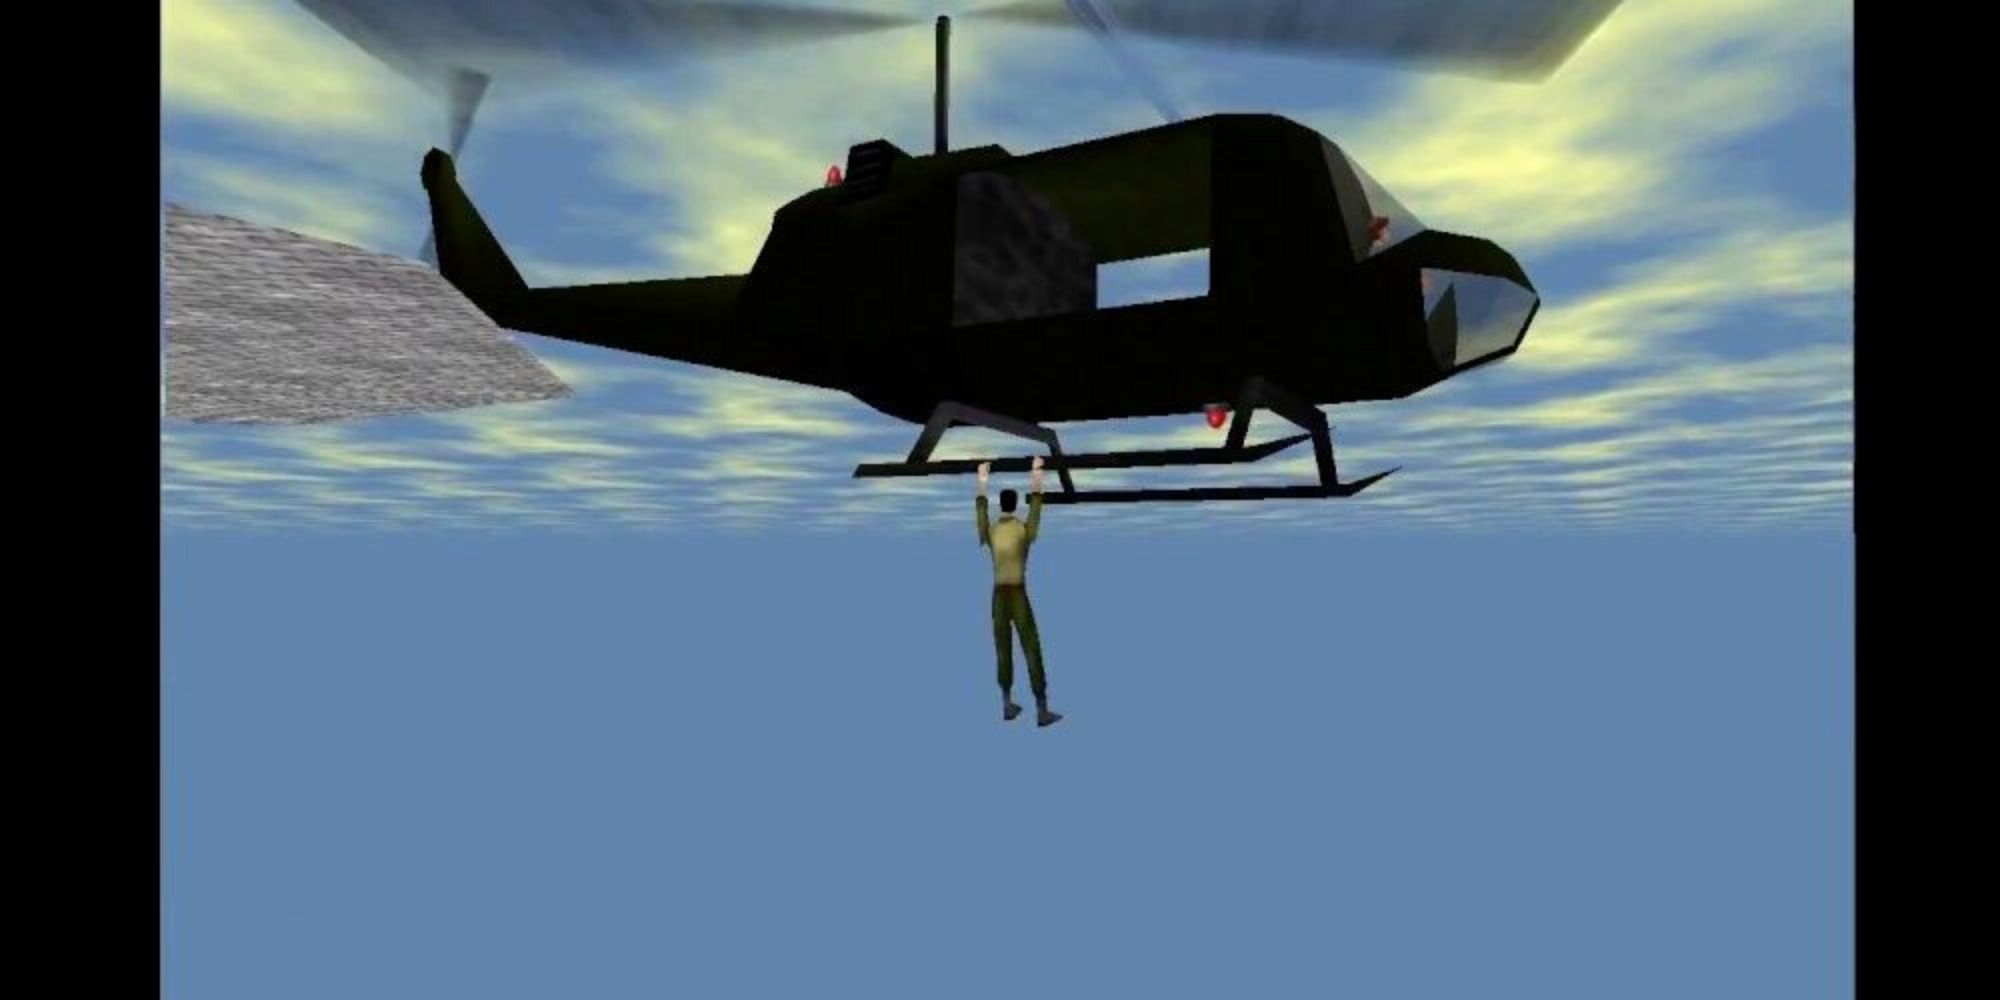 James Bond Helicopter Cutscene In Cradle Level In Goldeneye 007 On Nintendo 64